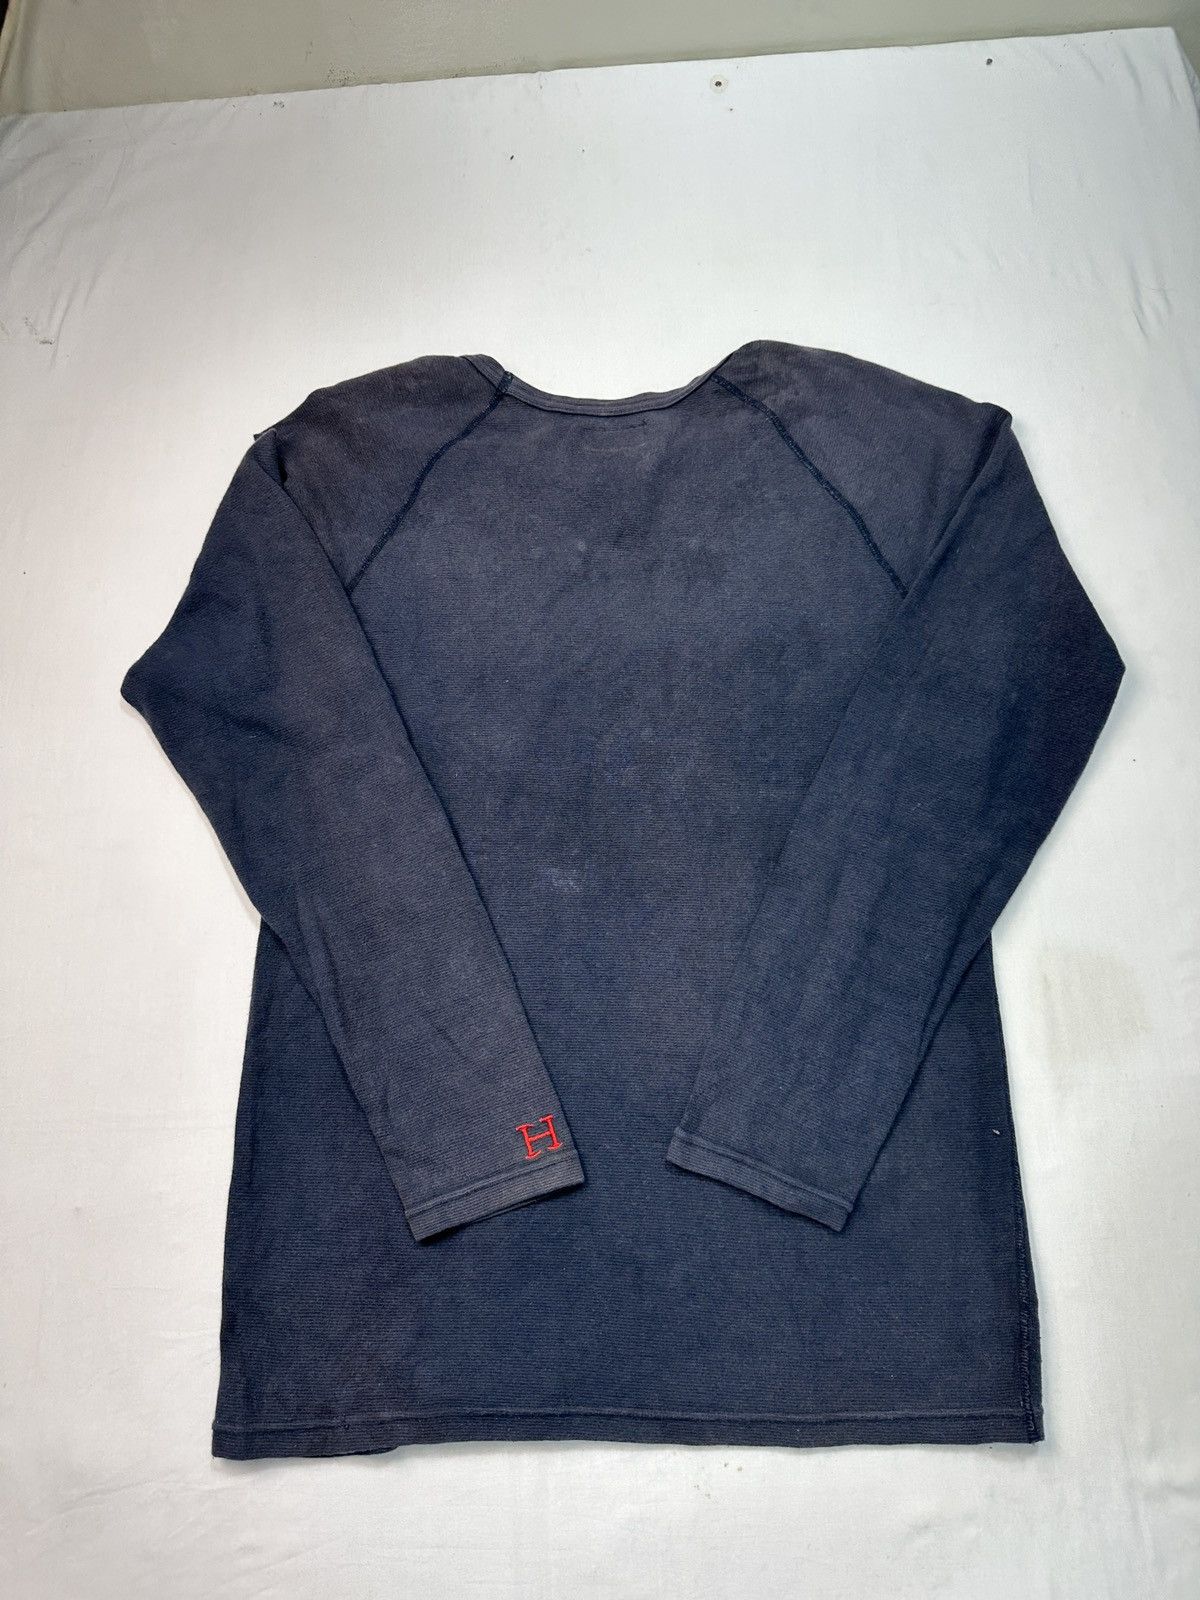 Vintage HR Market plain long sleeve tee shirt Size US S / EU 44-46 / 1 - 17 Thumbnail